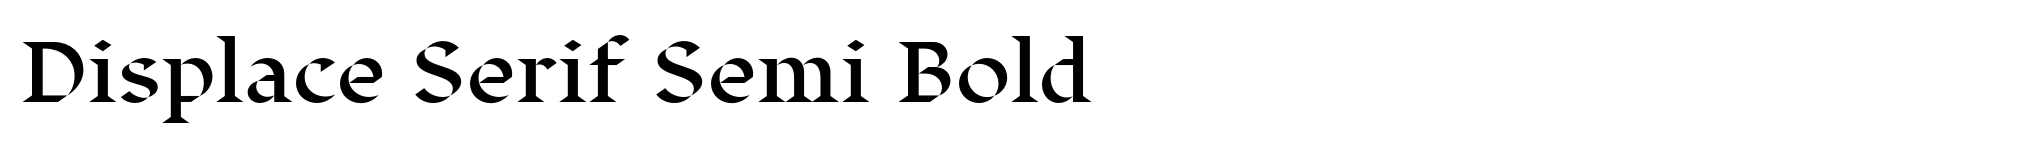 Displace Serif Semi Bold image